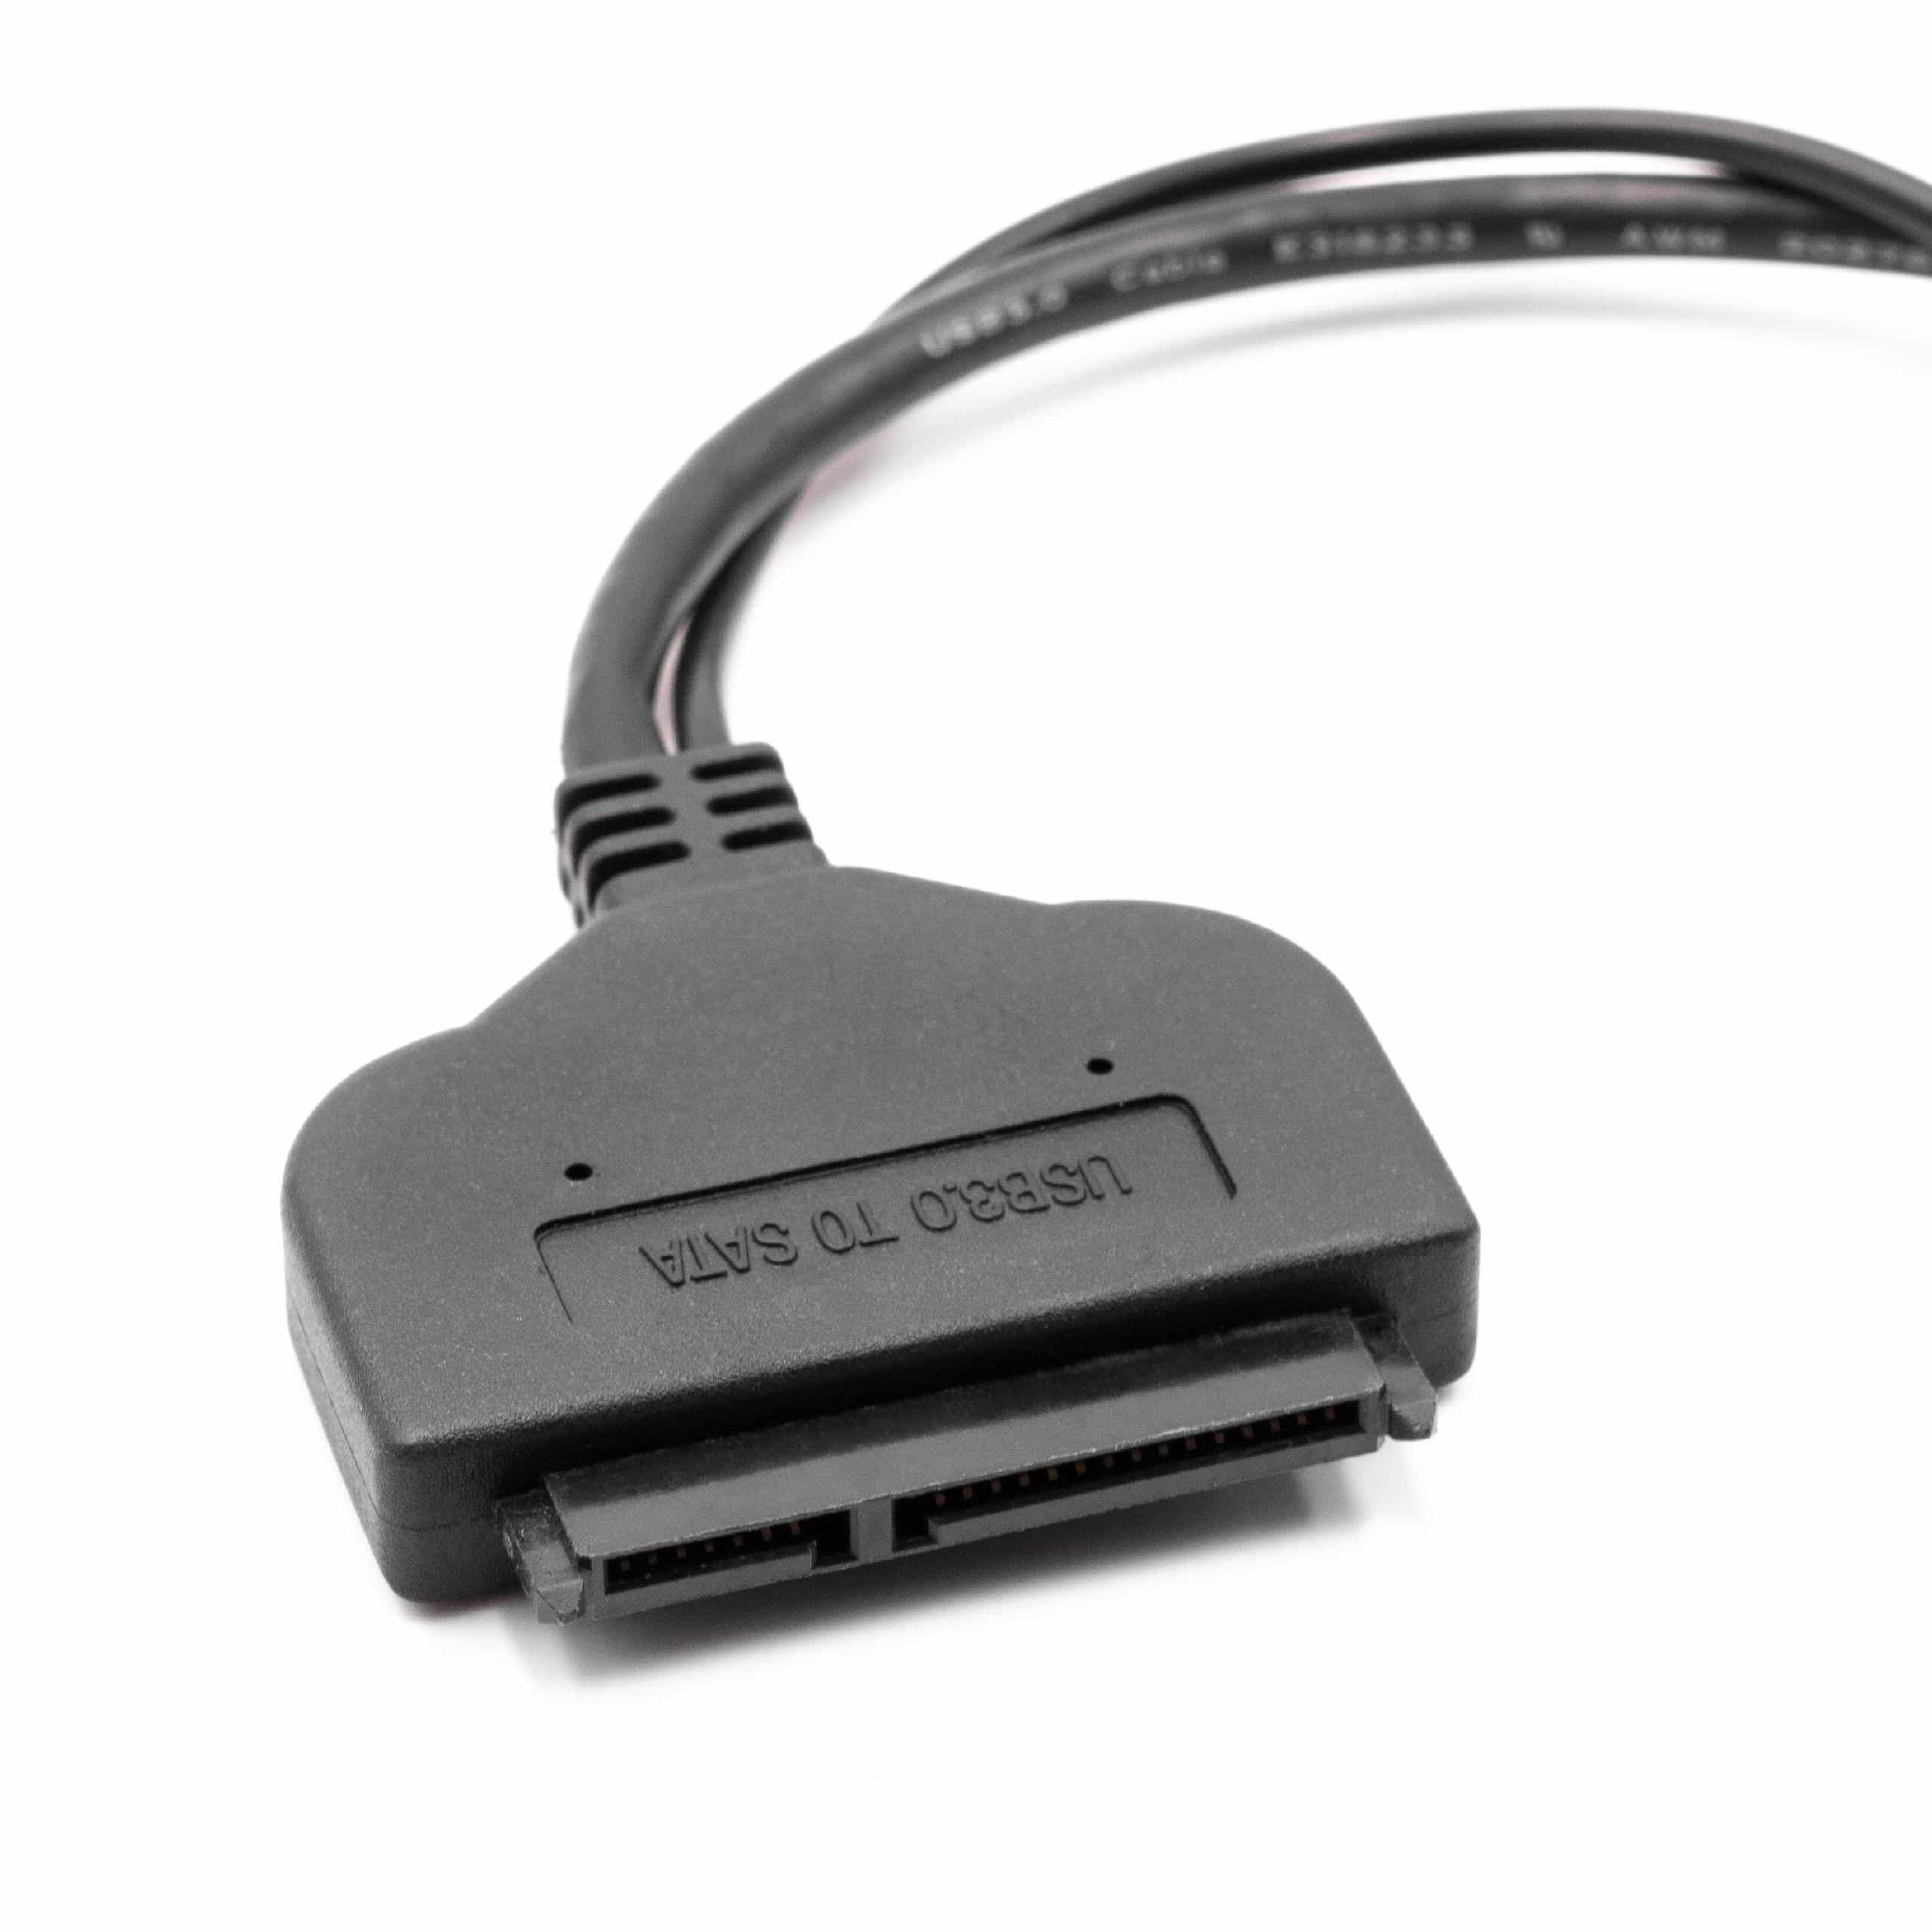 SATA III vers USB 3.0 Câble de raccordement pour disque dur HDD, SSD Plug & Play noir